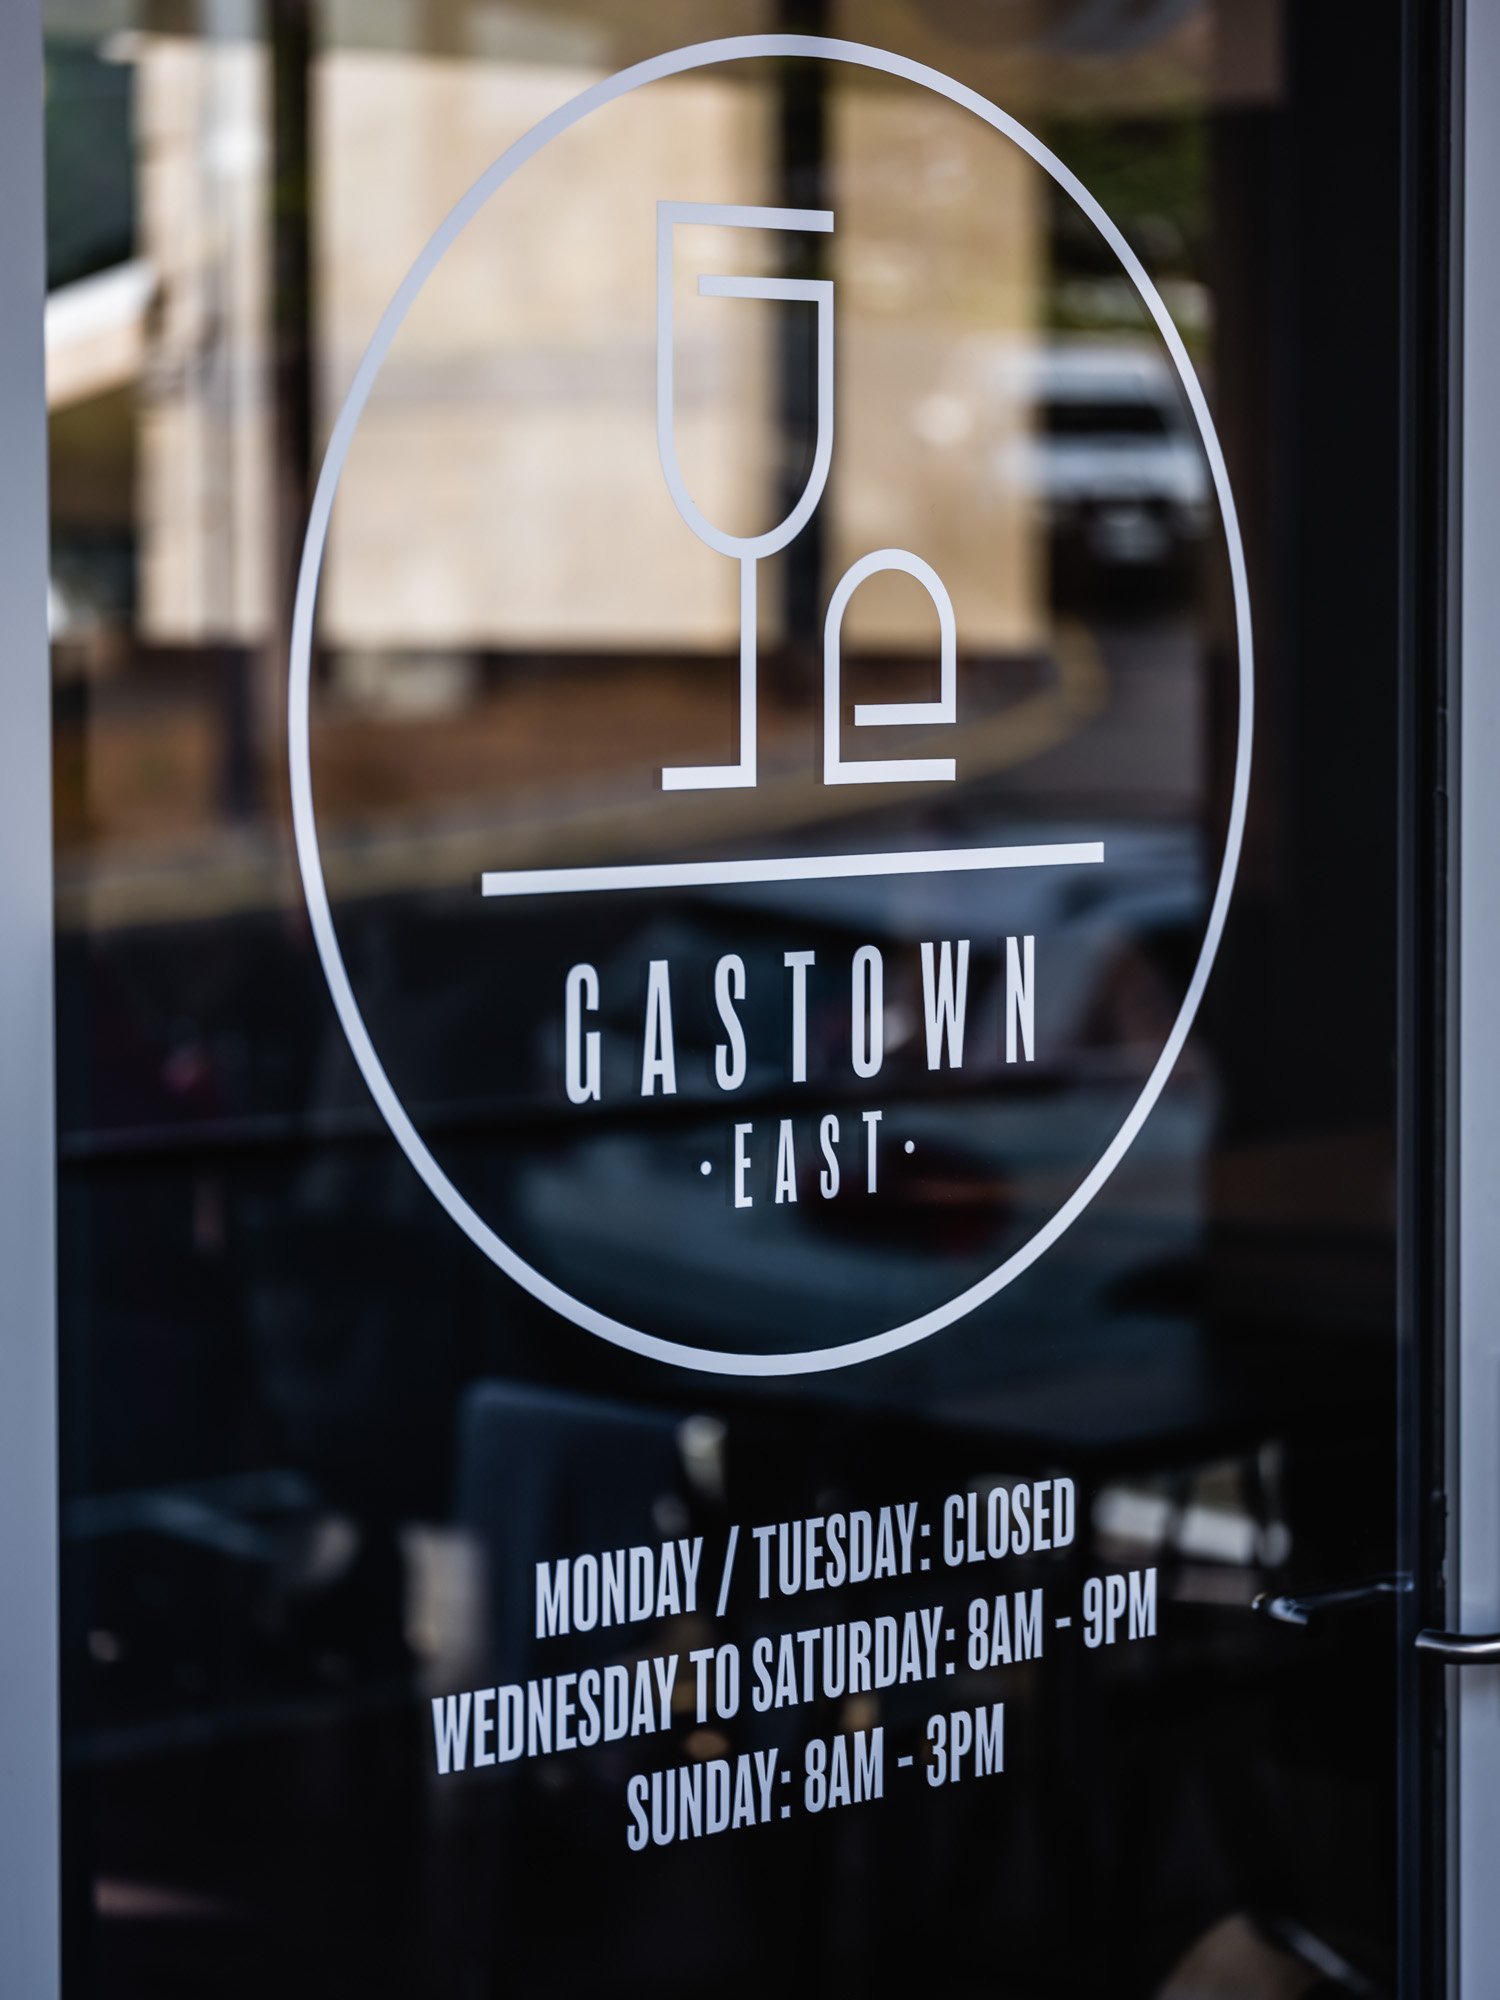 Gastown East - Restaurants Sydney 3